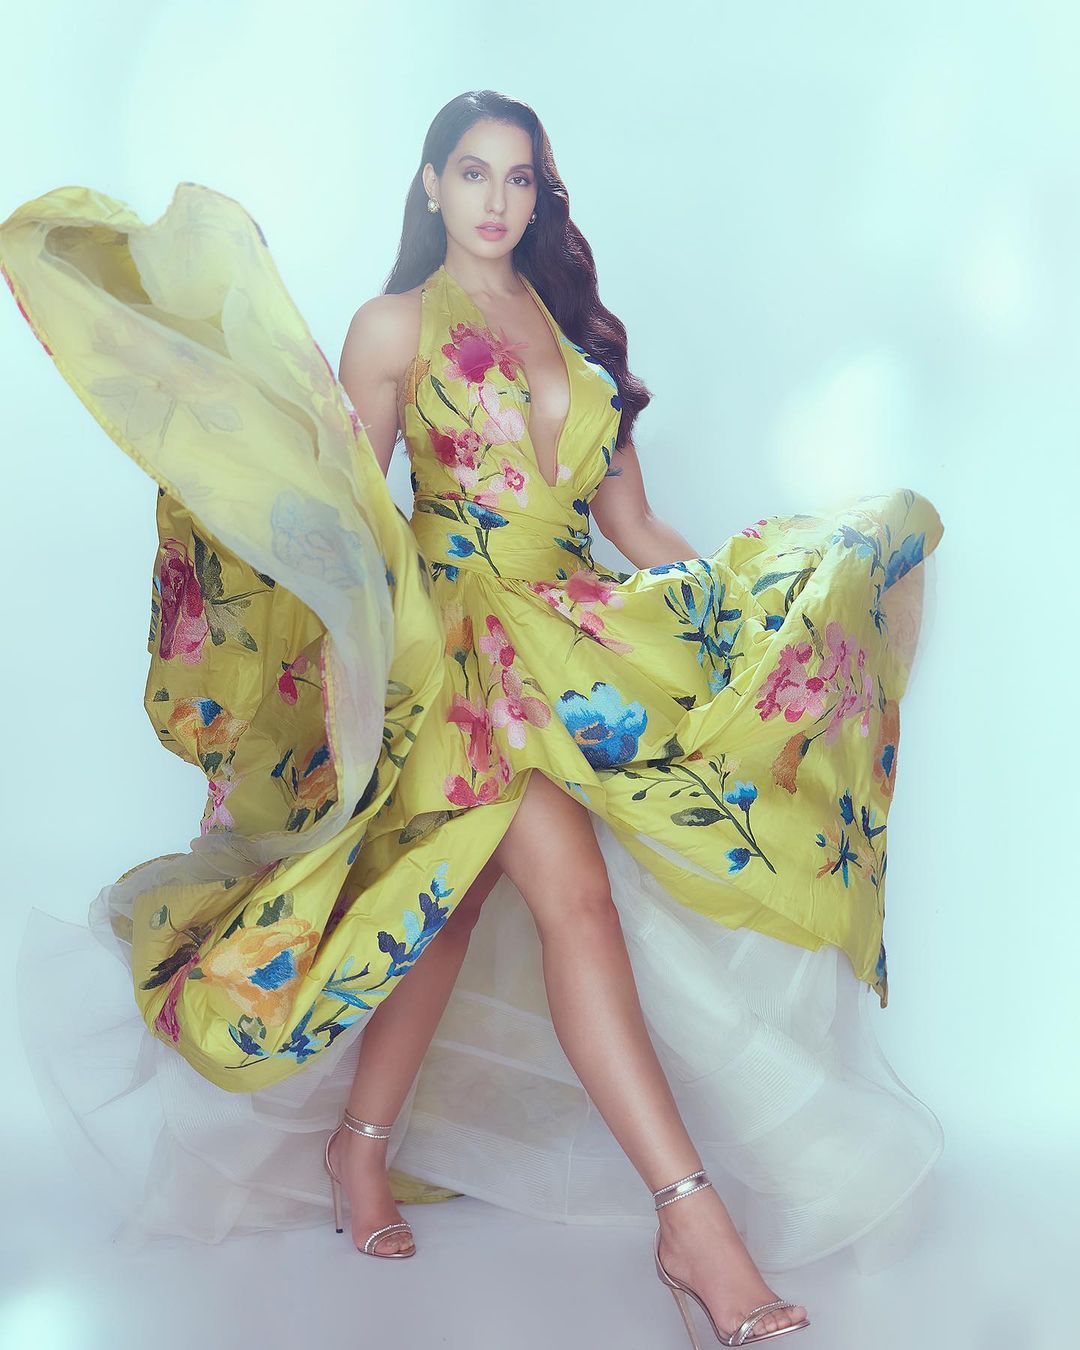 Nora Fatehi looks striking in the floral flowy dress